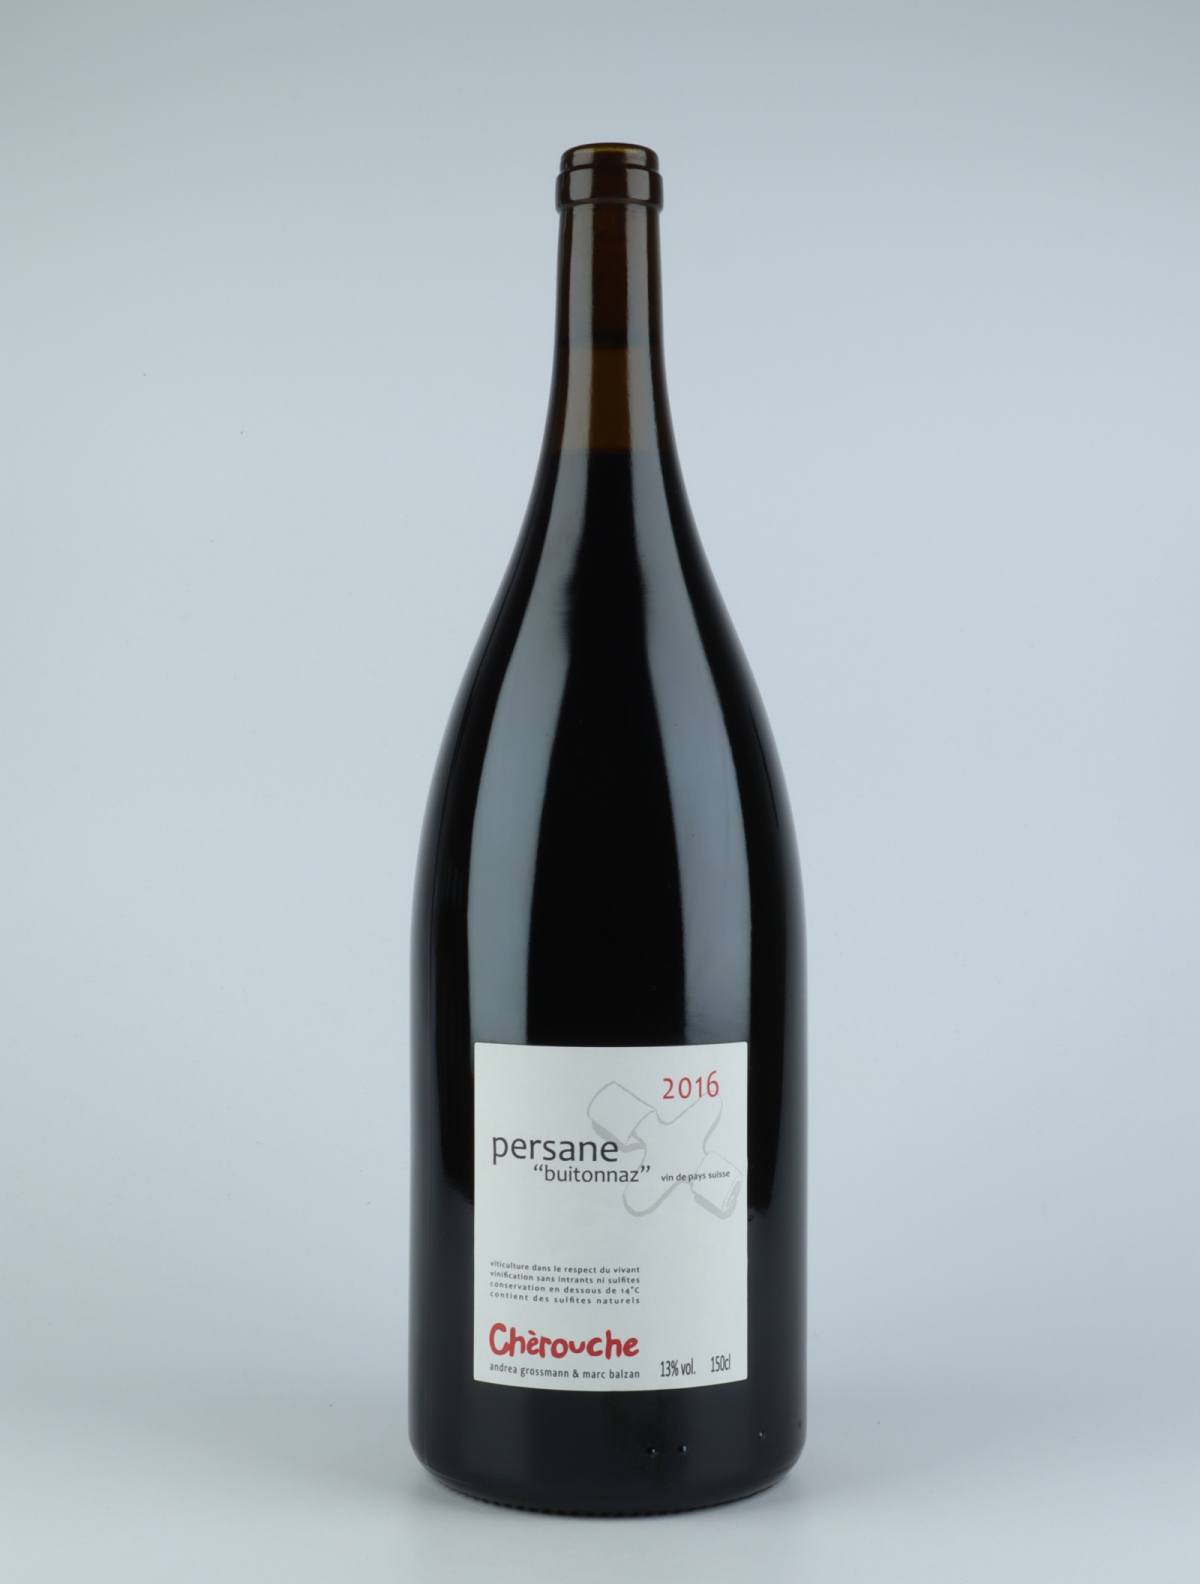 En flaske 2016 Persane Syrah - Magnum Rødvin fra Chèrouche, Valais i Schweiz